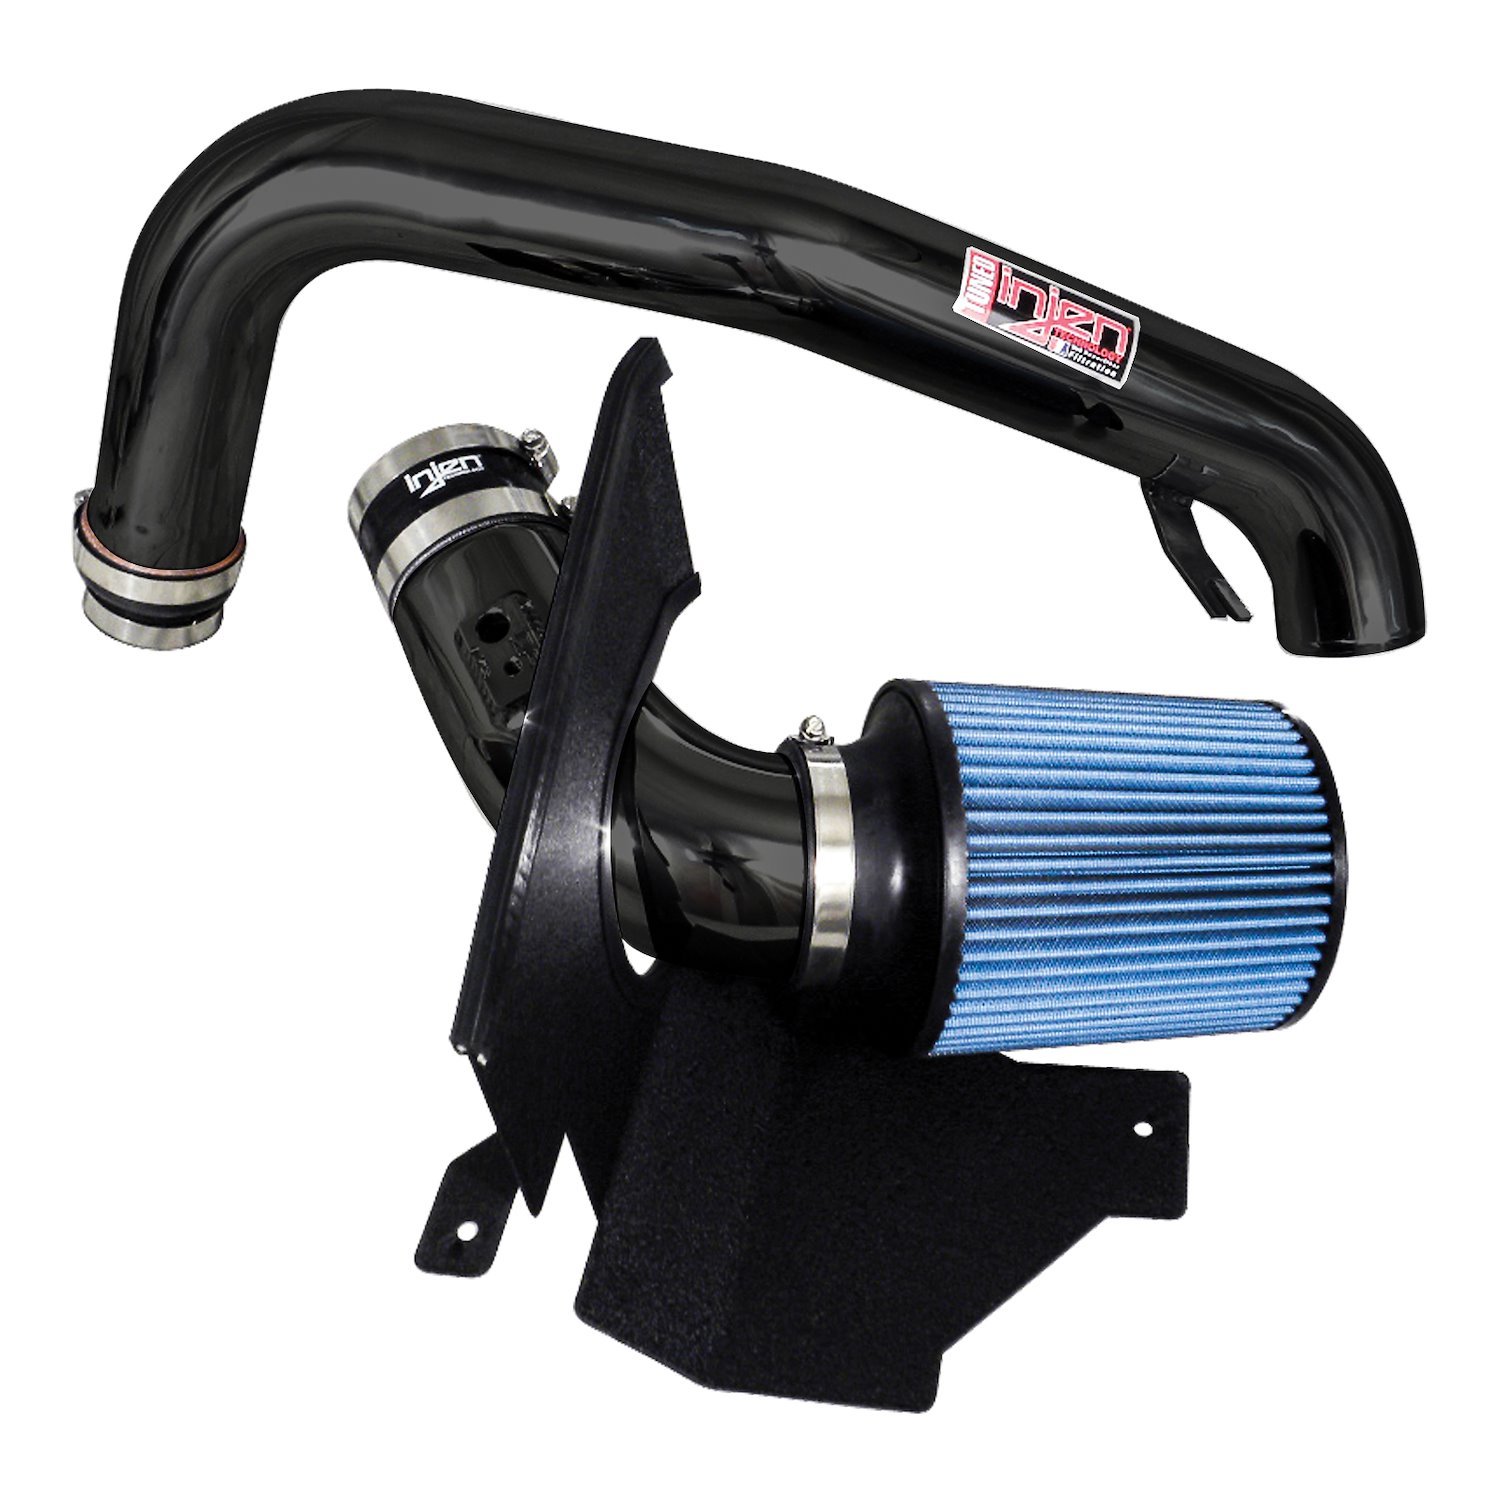 Black SP Short Ram Intake System, 2013-2014 Ford Focus ST 2.0L Turbo